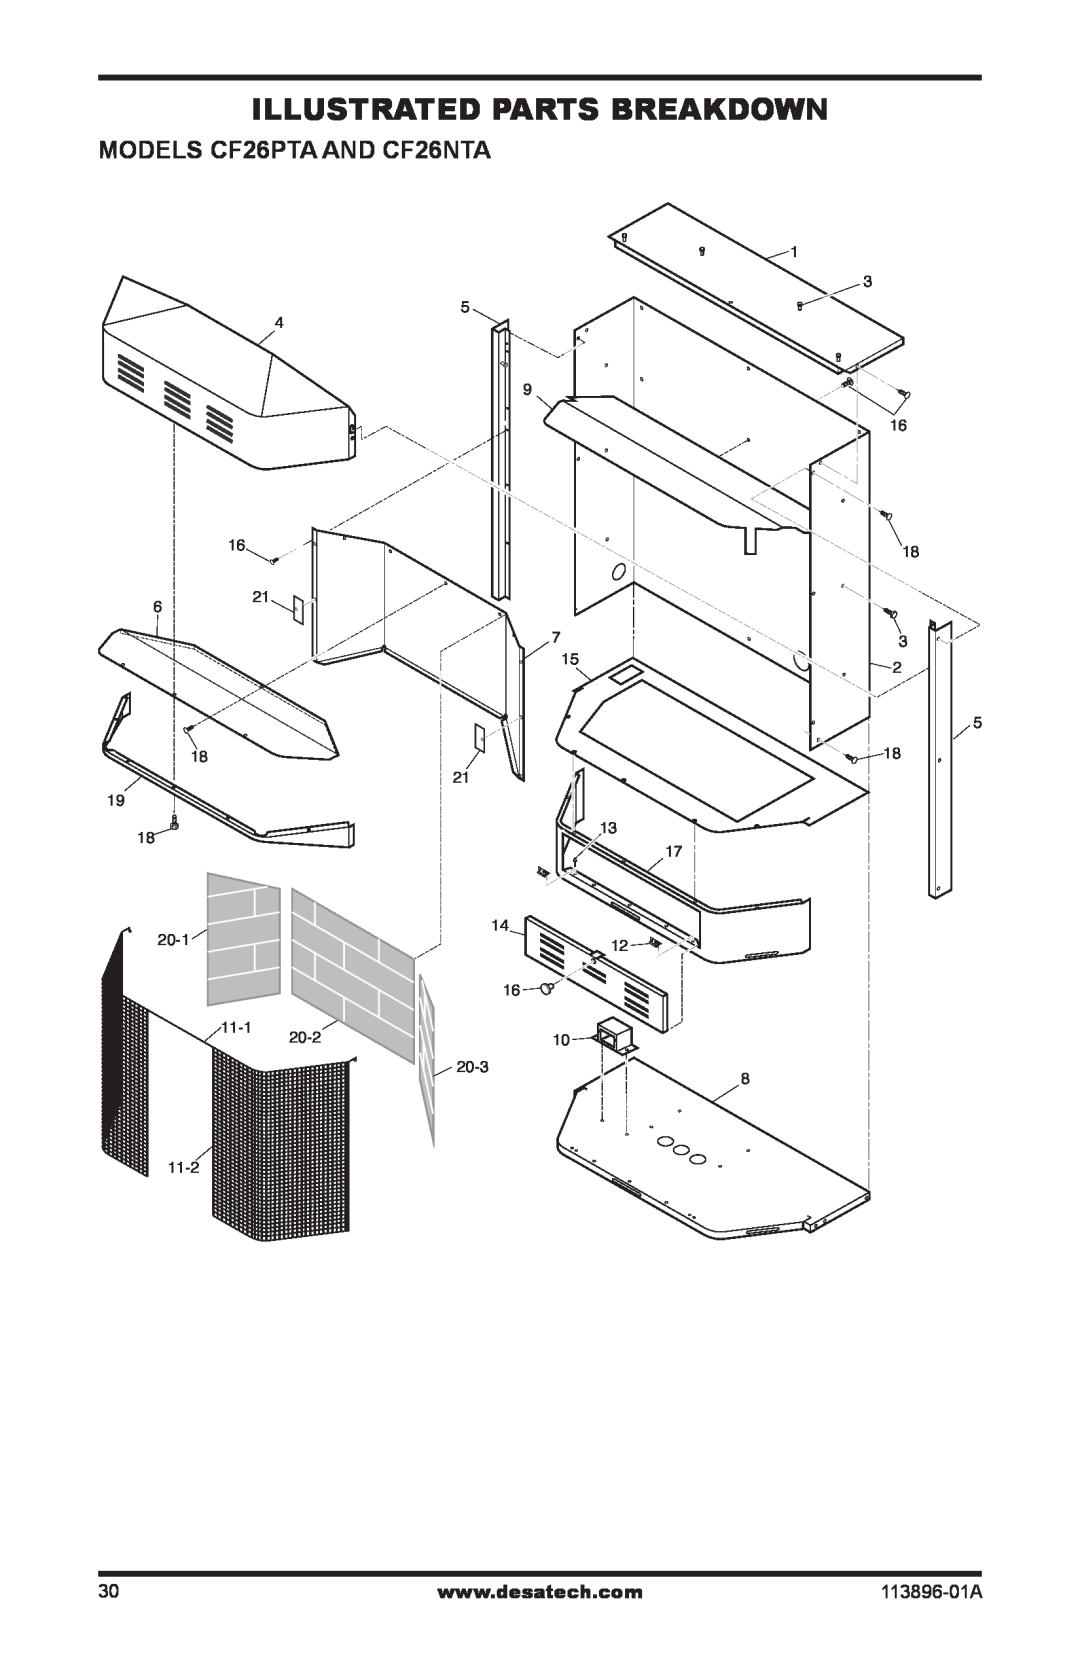 Desa installation manual Illustrated Parts Breakdown, MODELS CF26PTA AND CF26NTA, 20-1, 20-3, 11-2 